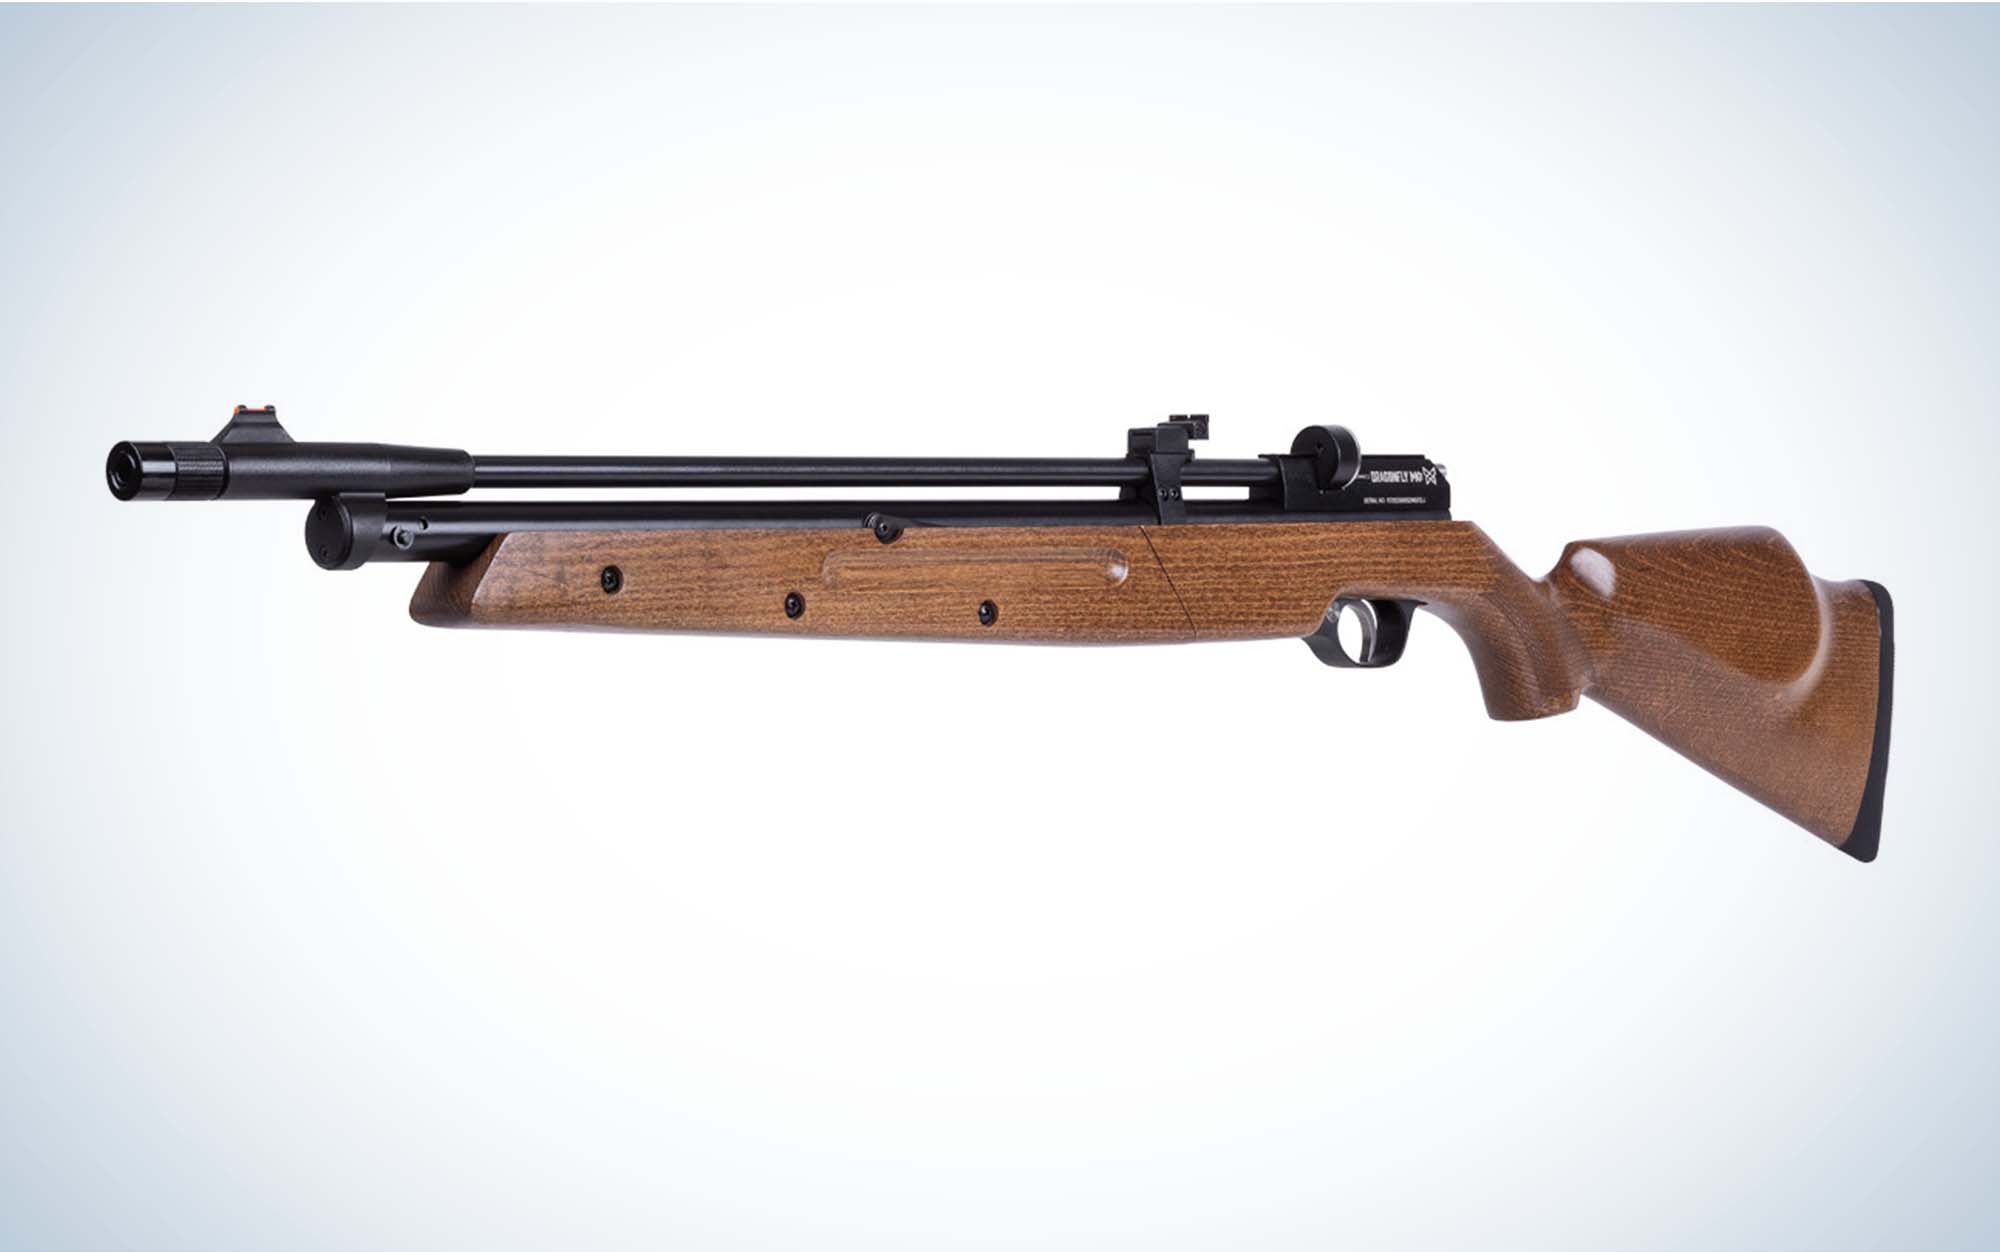 The Seneca Dragonfly MK2 air rifle features a hardwood stock.